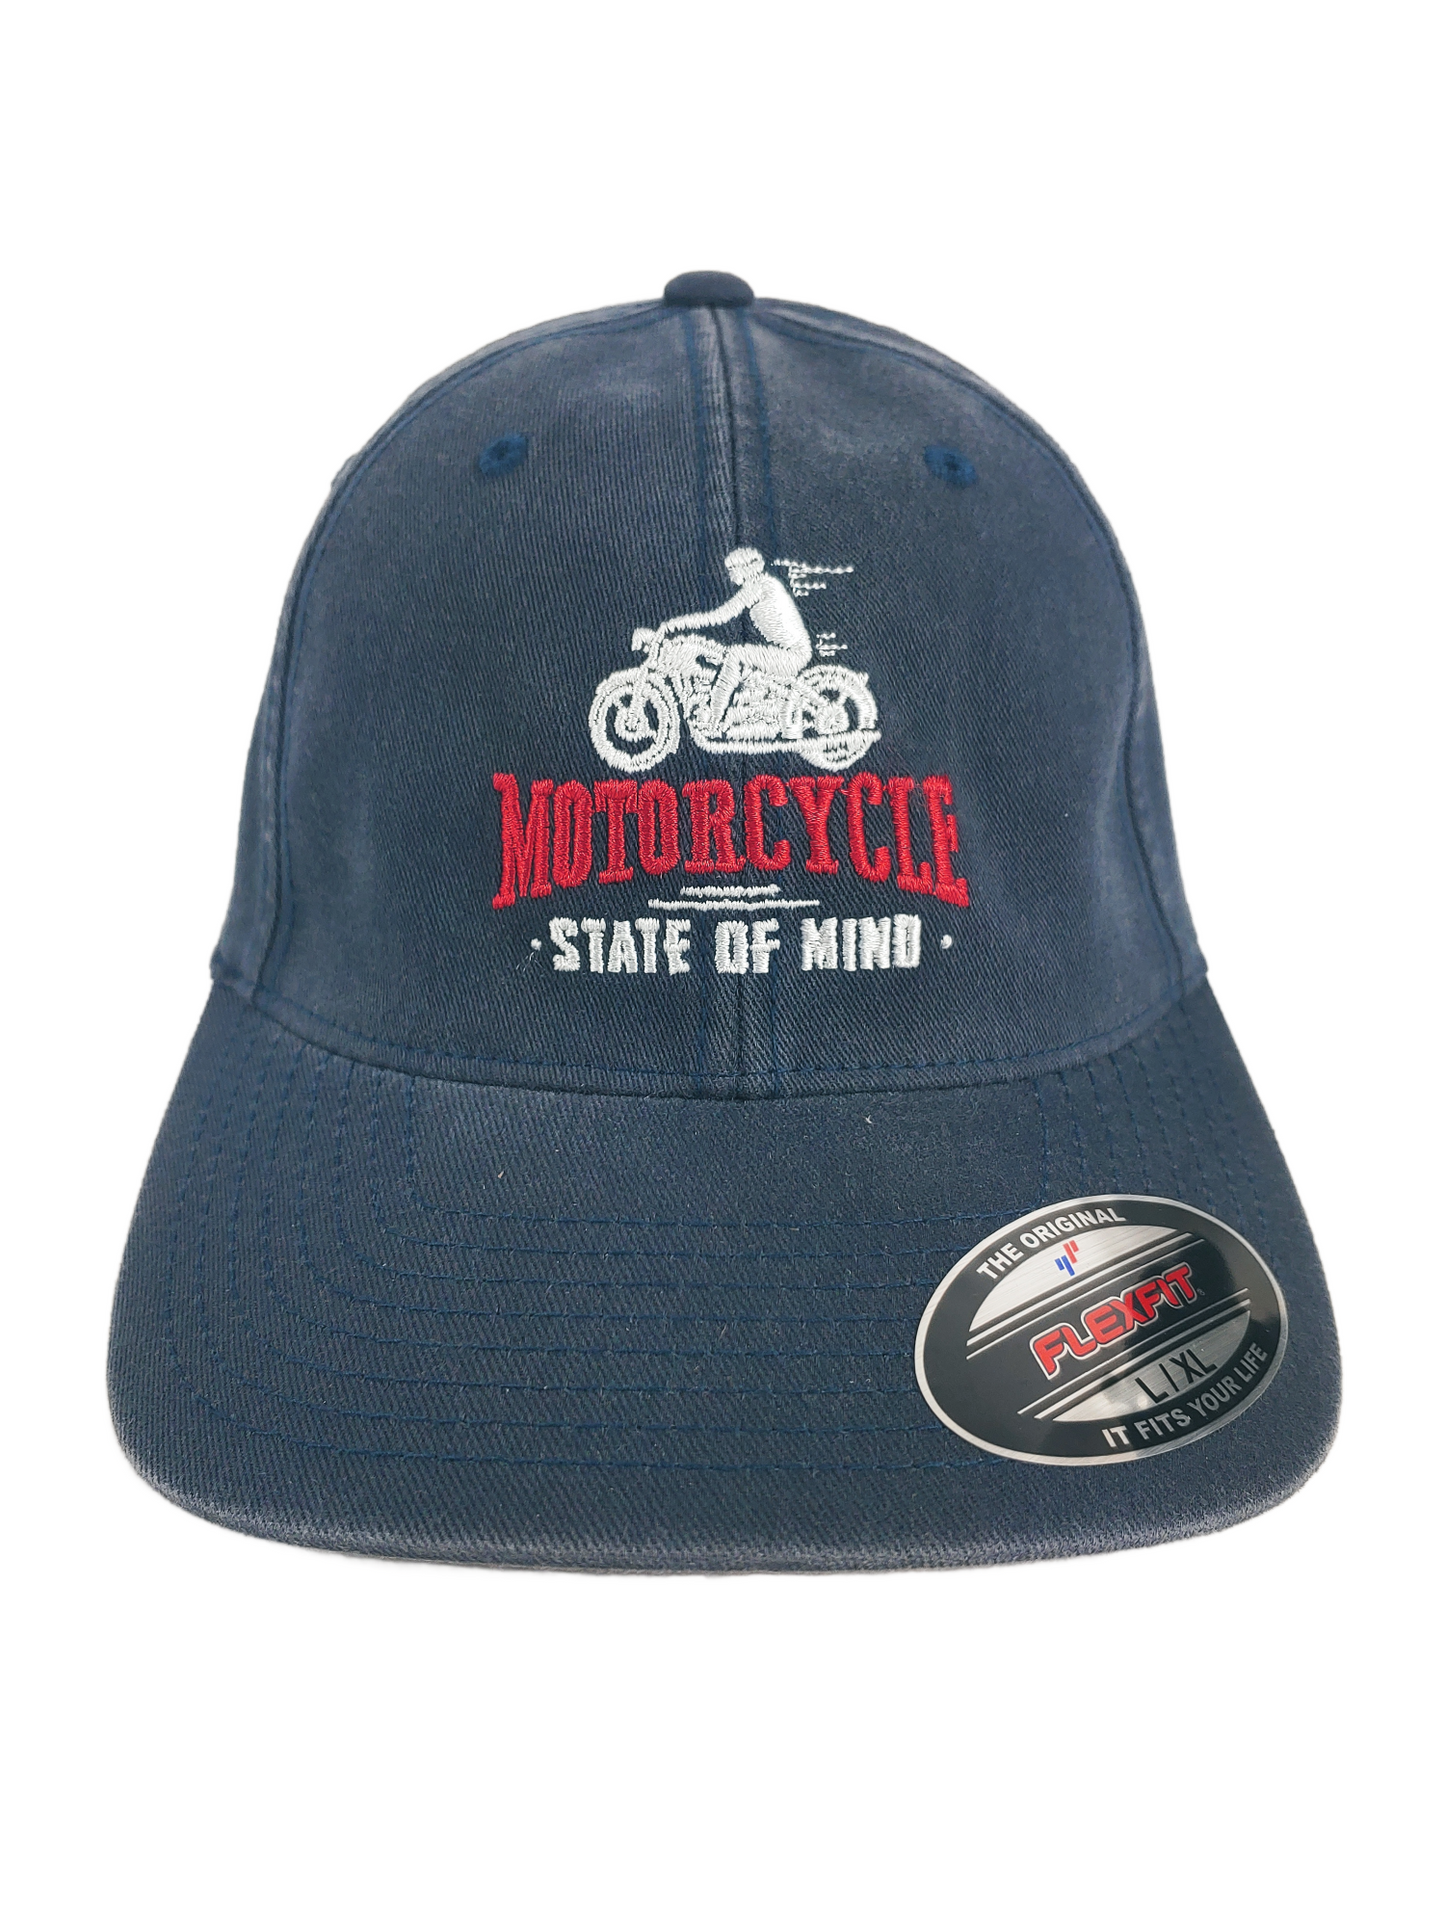 Motorcycle State of Mind - Dark Denim - Flex Fit - Baseball Style Hat